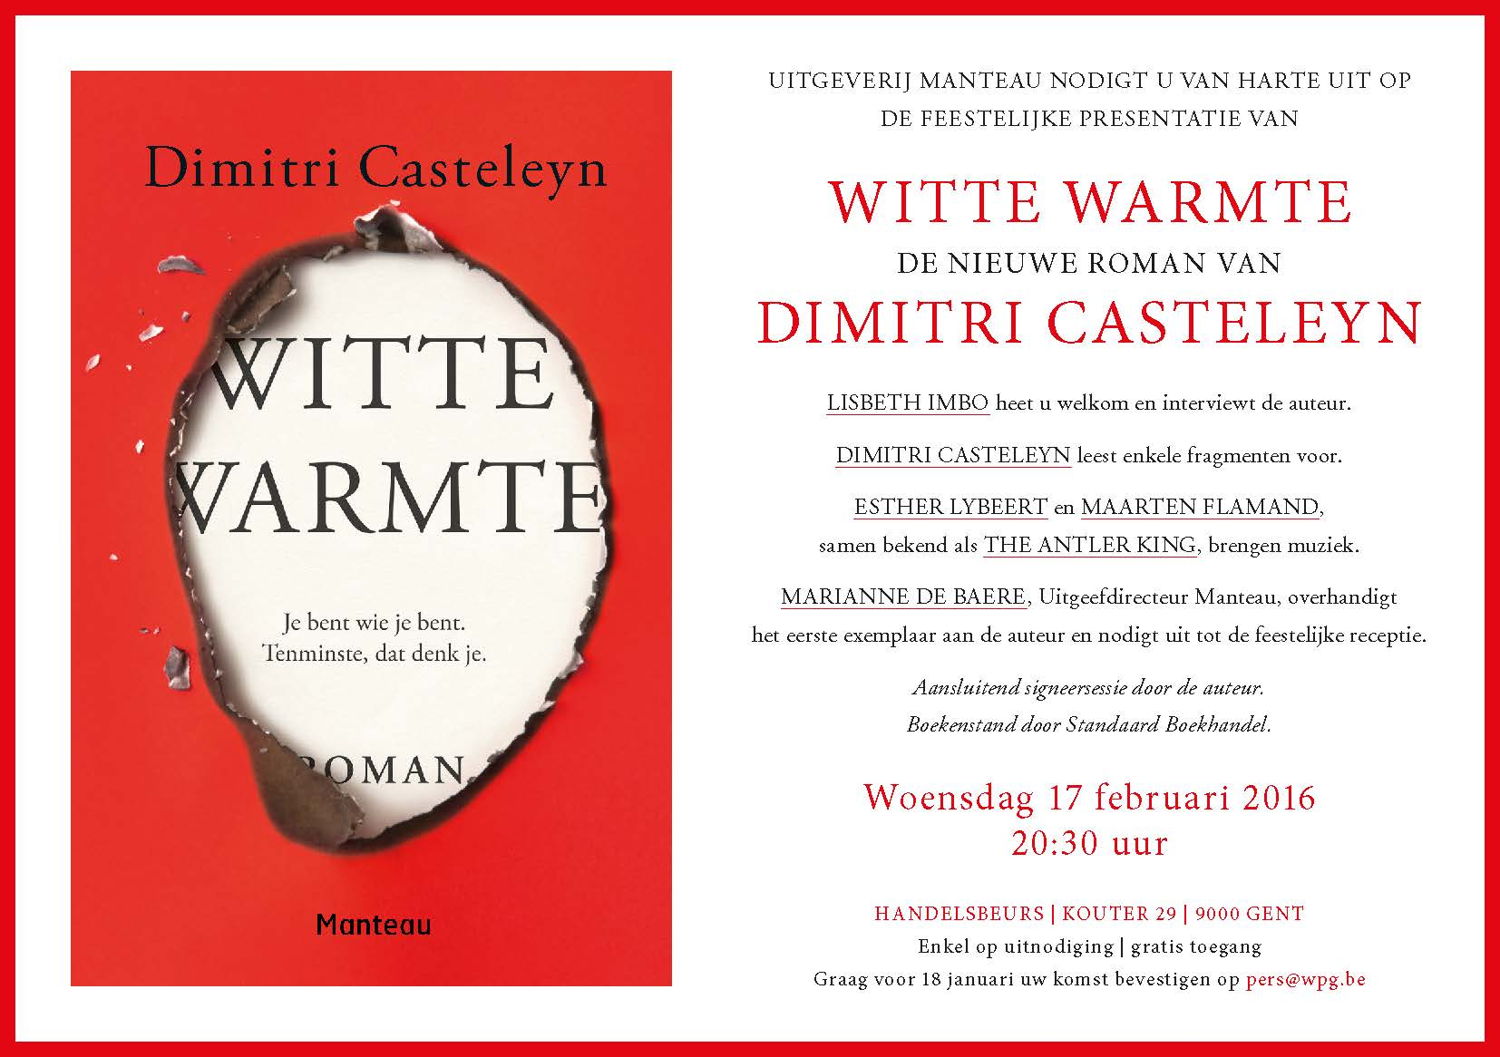 Uitnodiging boekvoorstelling 'Witte warmte'